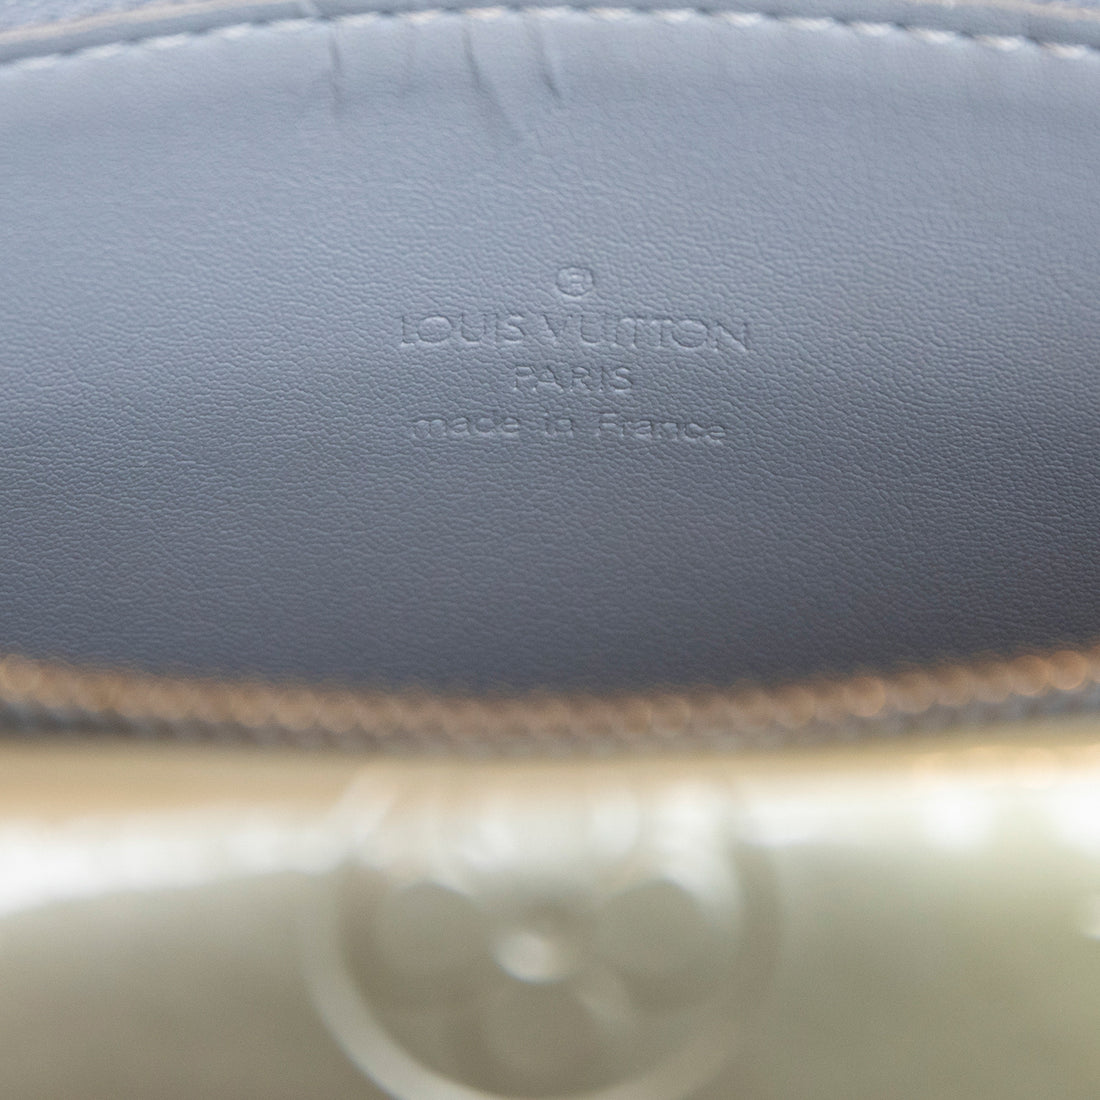 Louis Vuitton Mott bag in patent leather